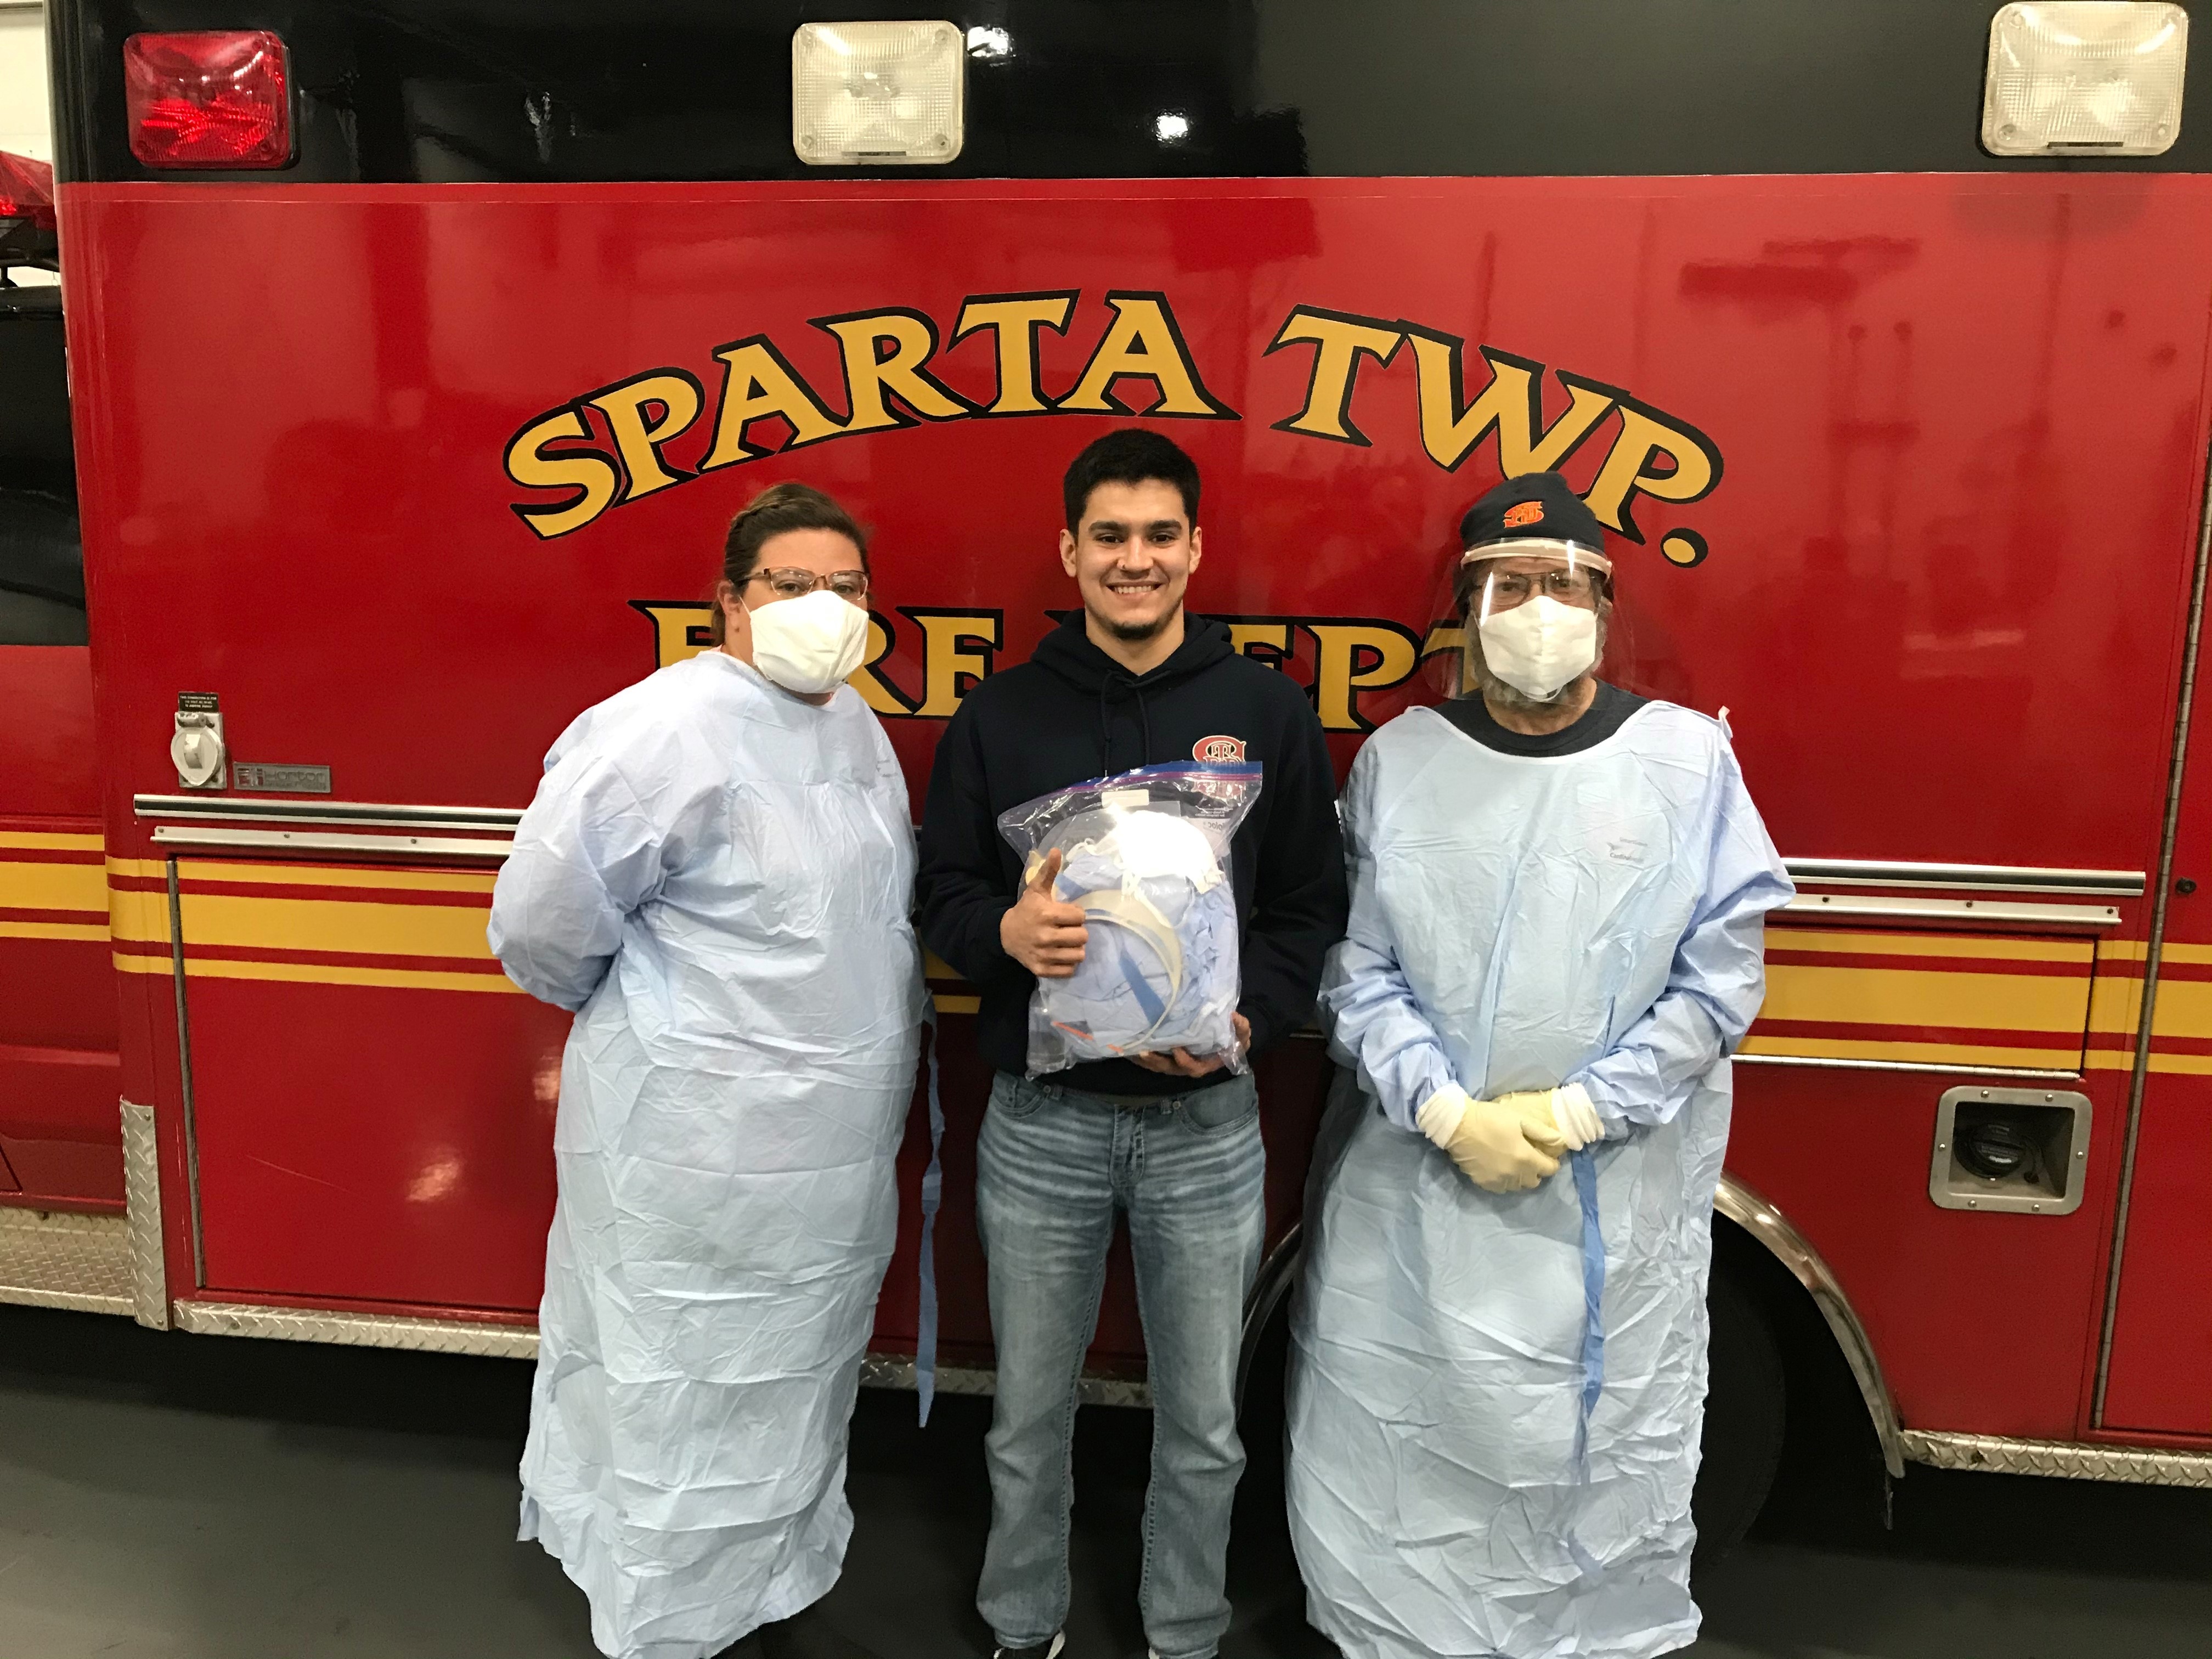 Sparta Township Fire Department